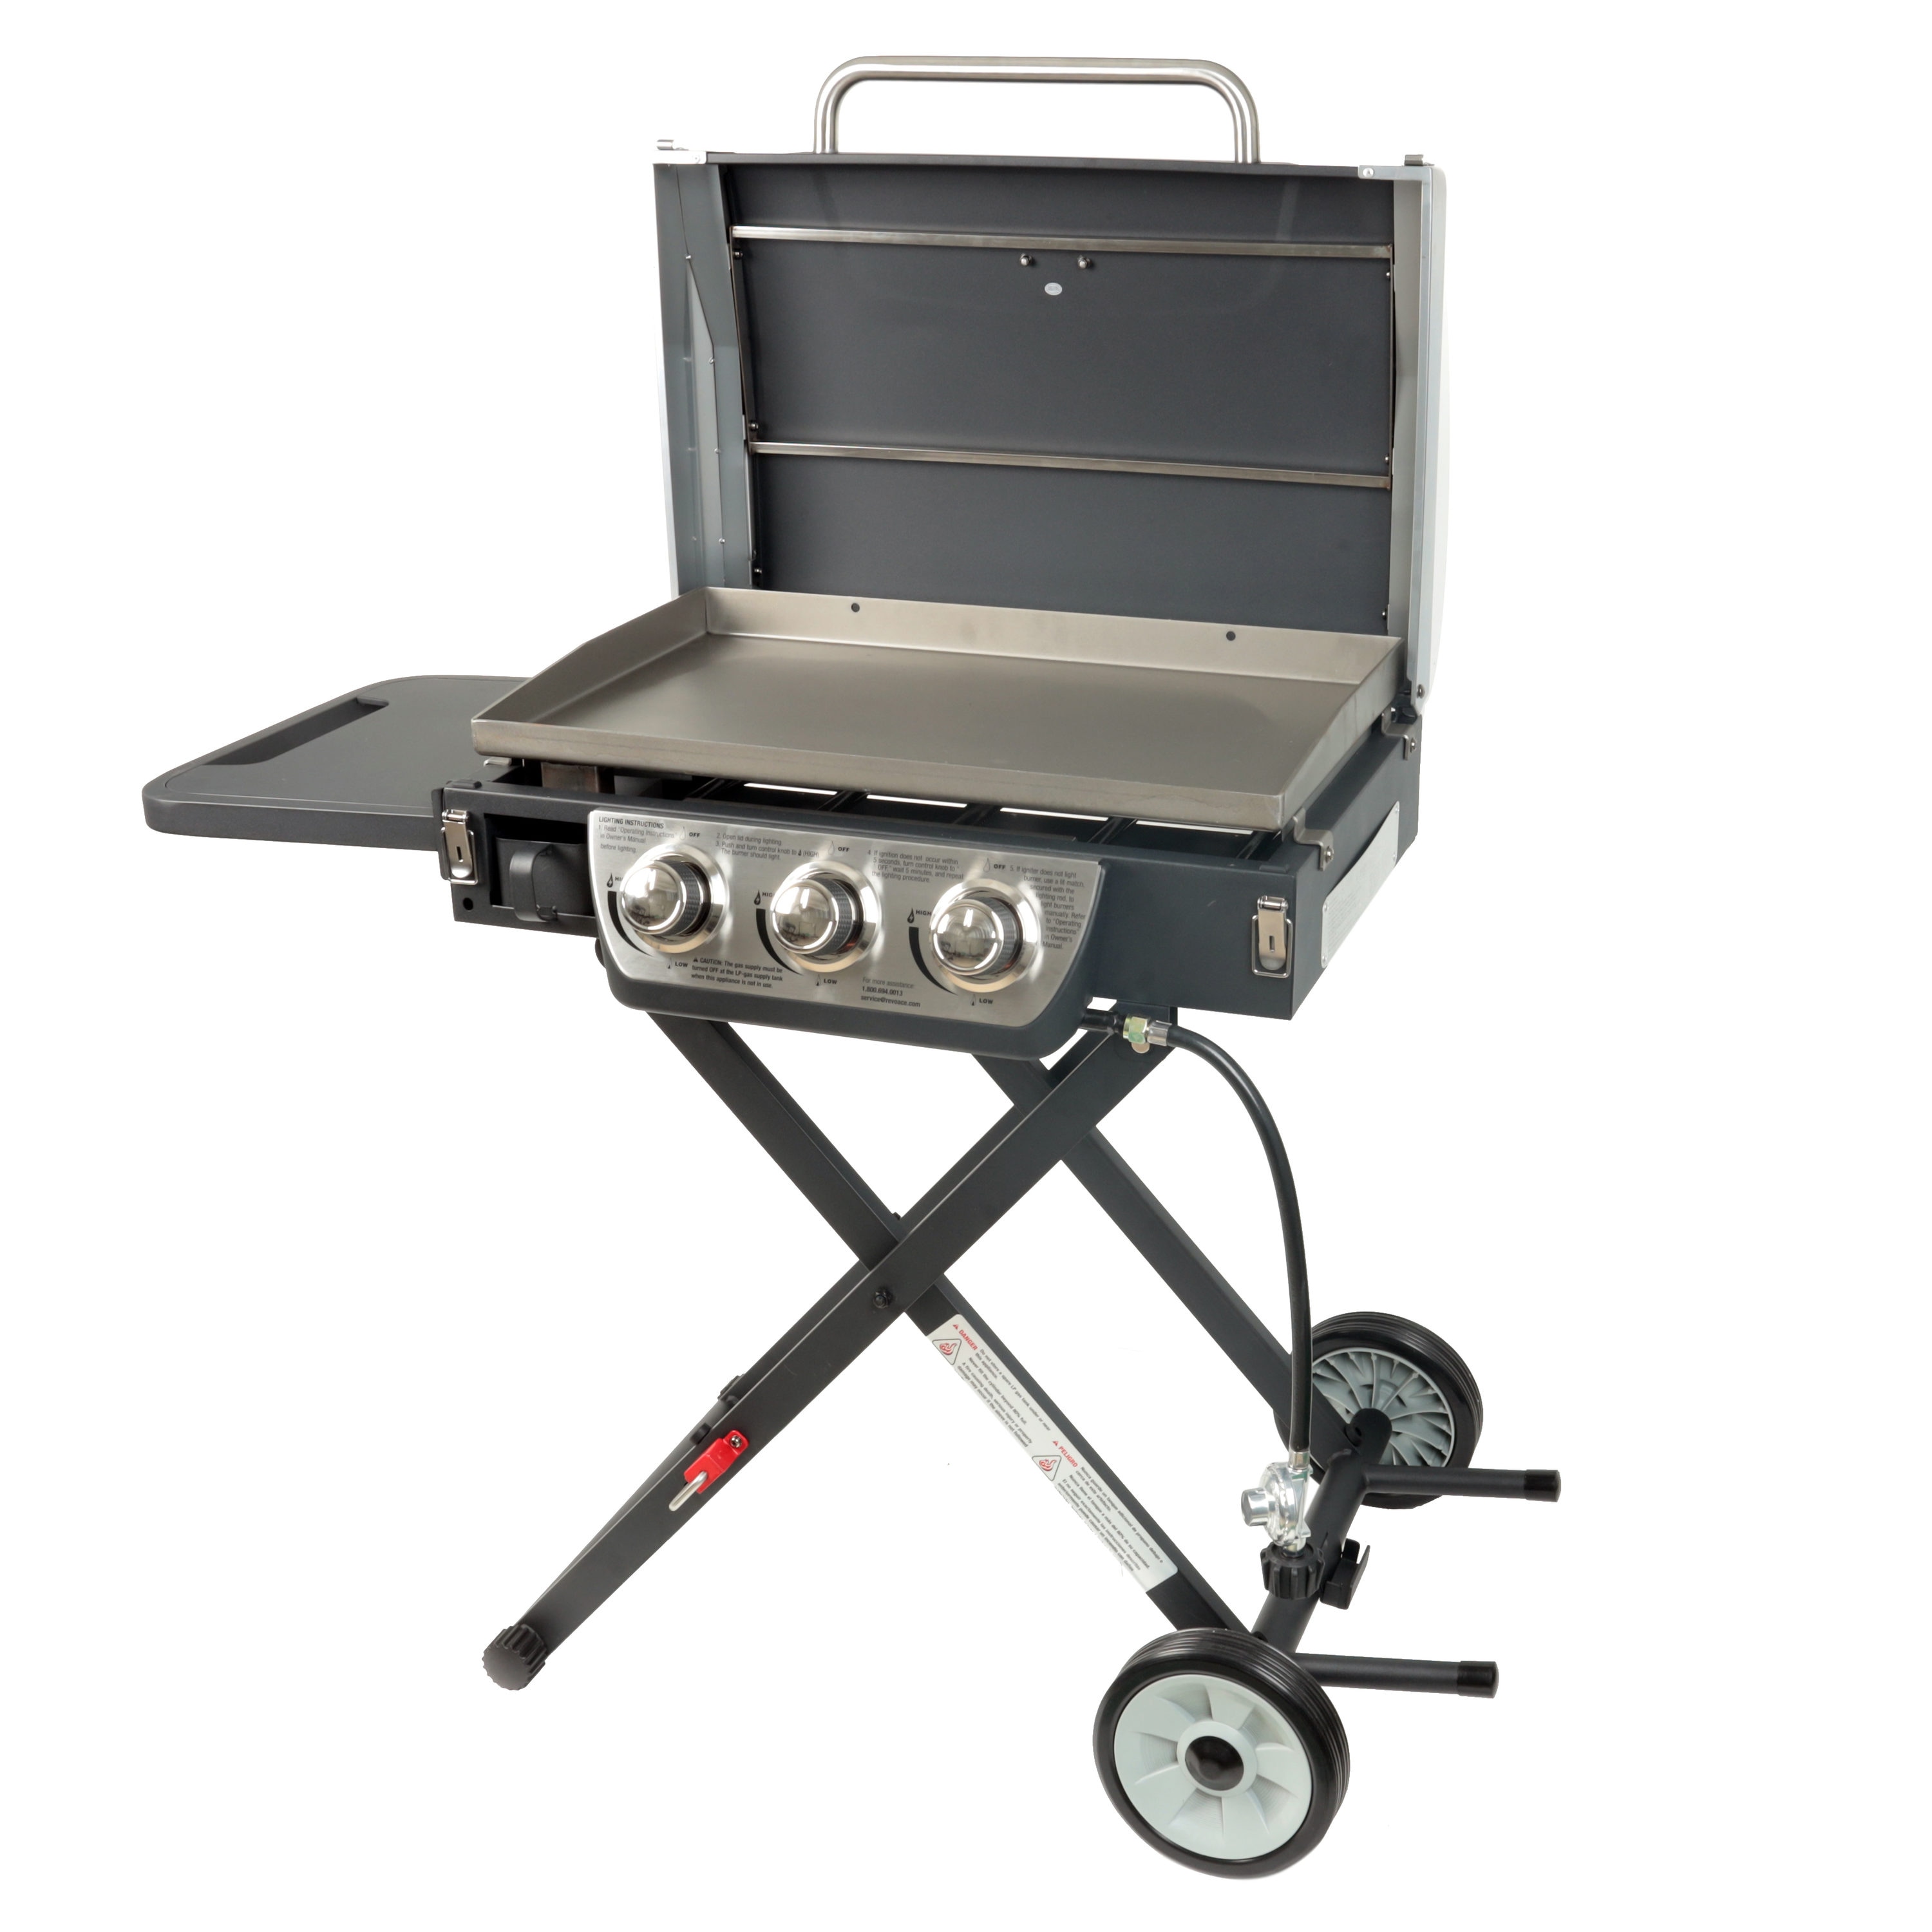 nsf portable propane flat top grill